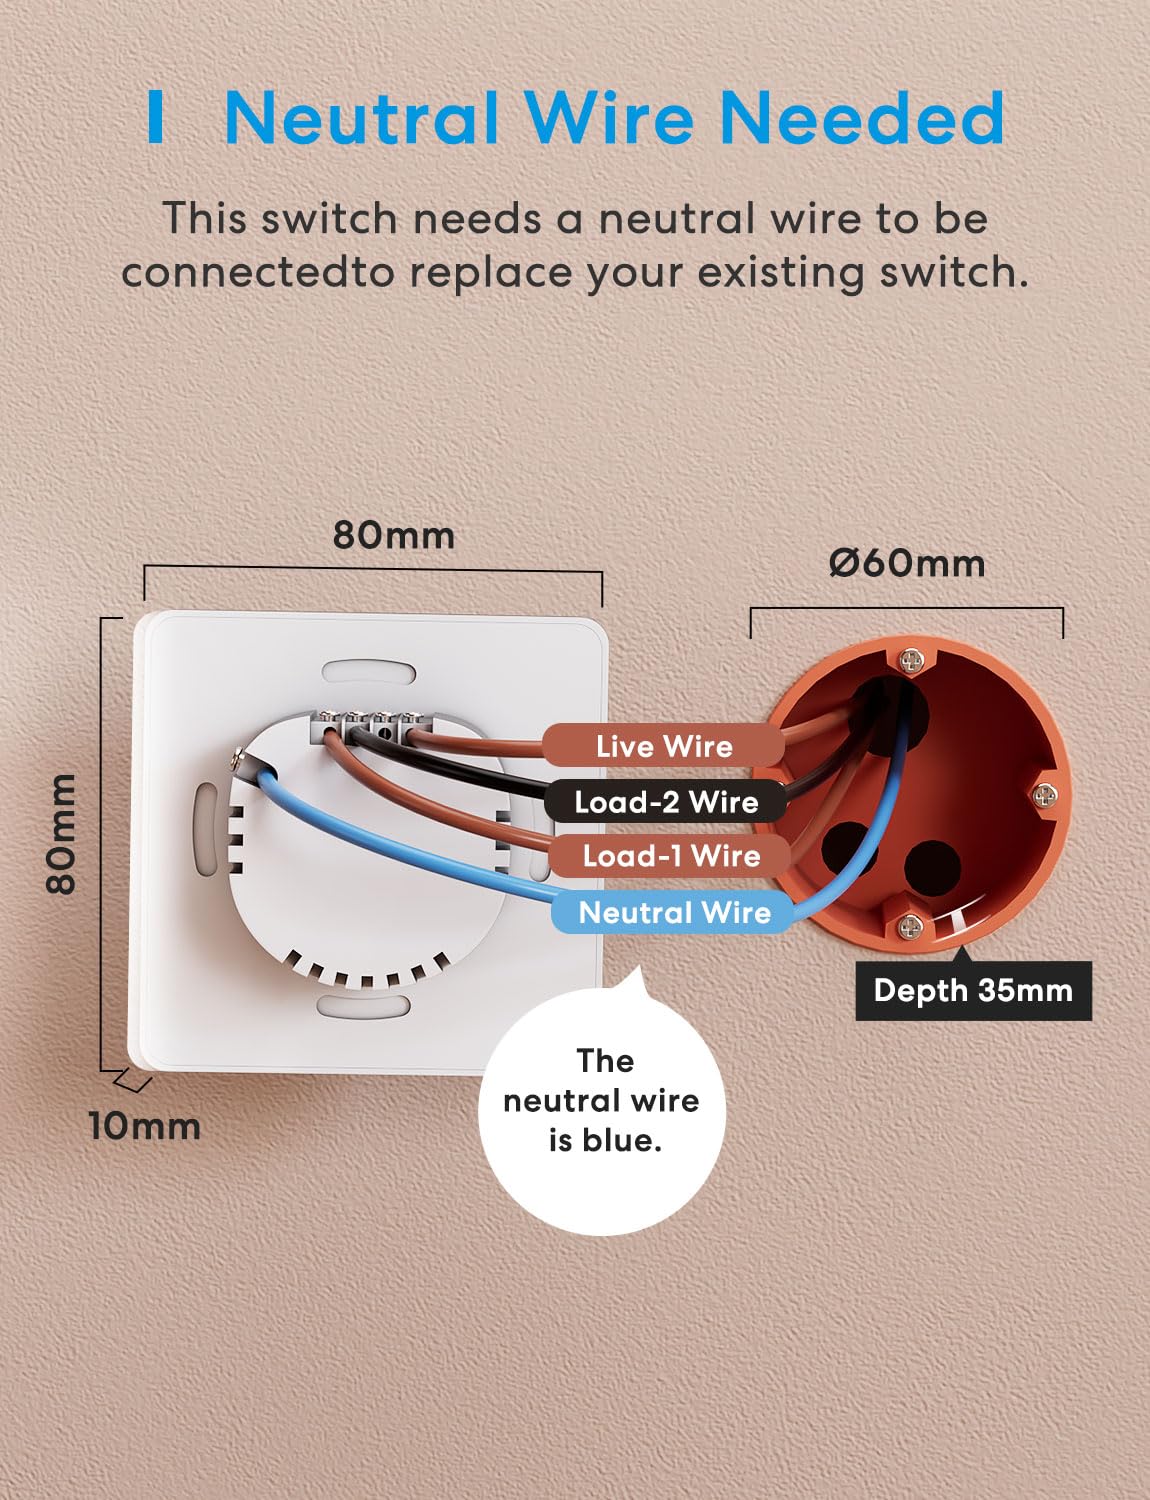 Meross Smart Two Way Light Switch, MSS550XHK (EU/UK Version)